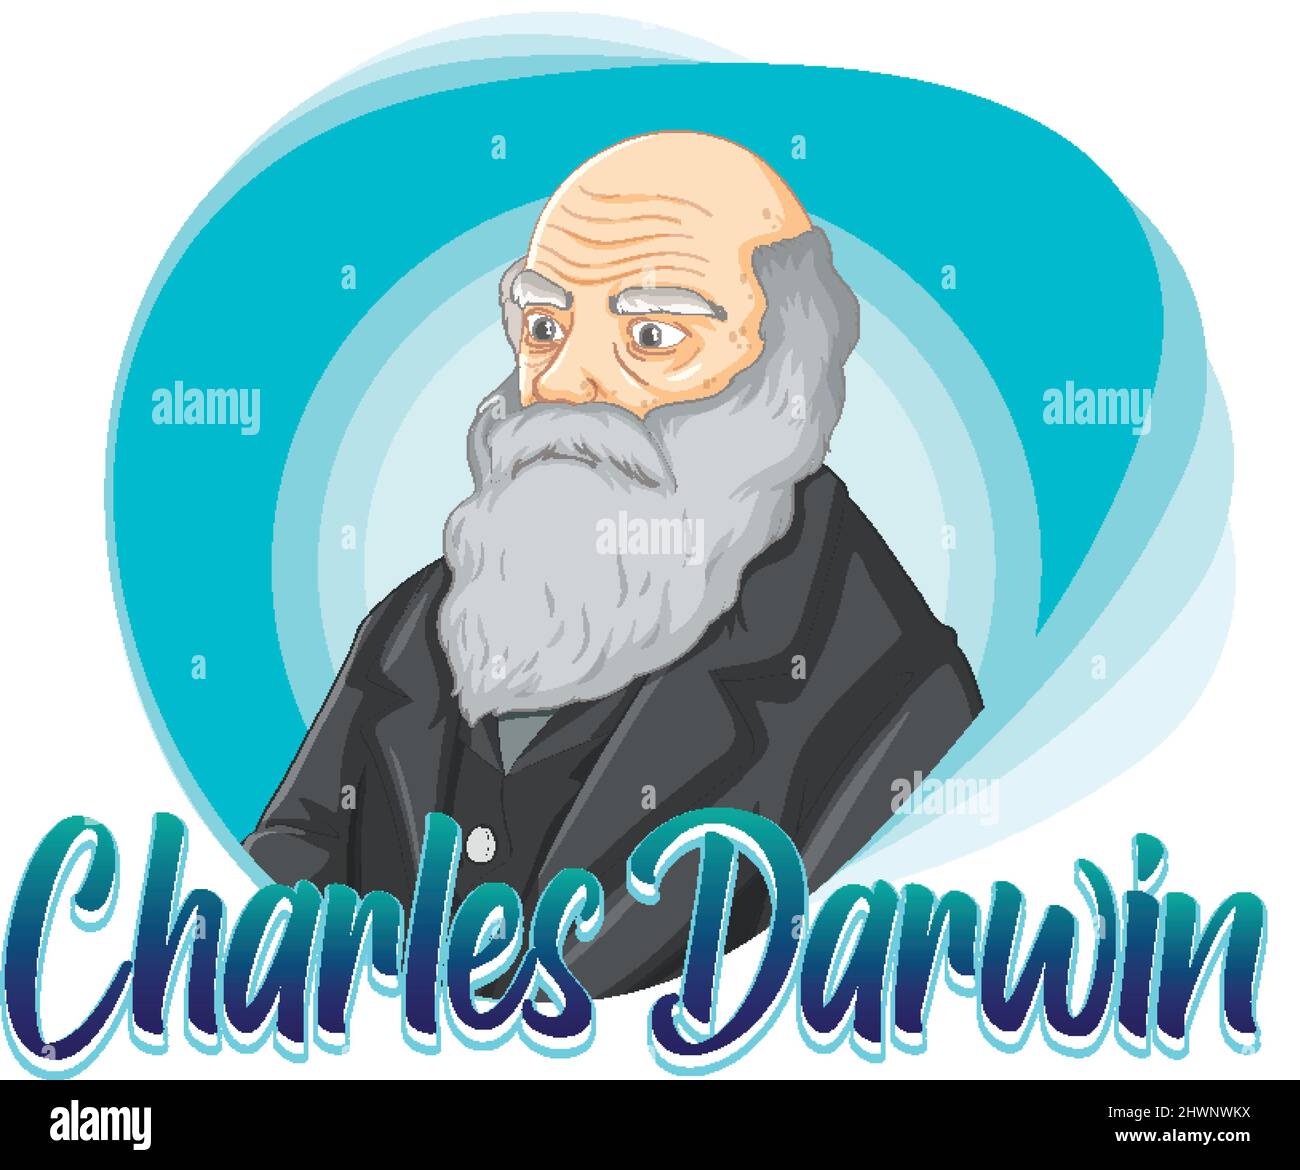 Porträt von Charles Darwin in Cartoon-Stil Illustration Stock Vektor